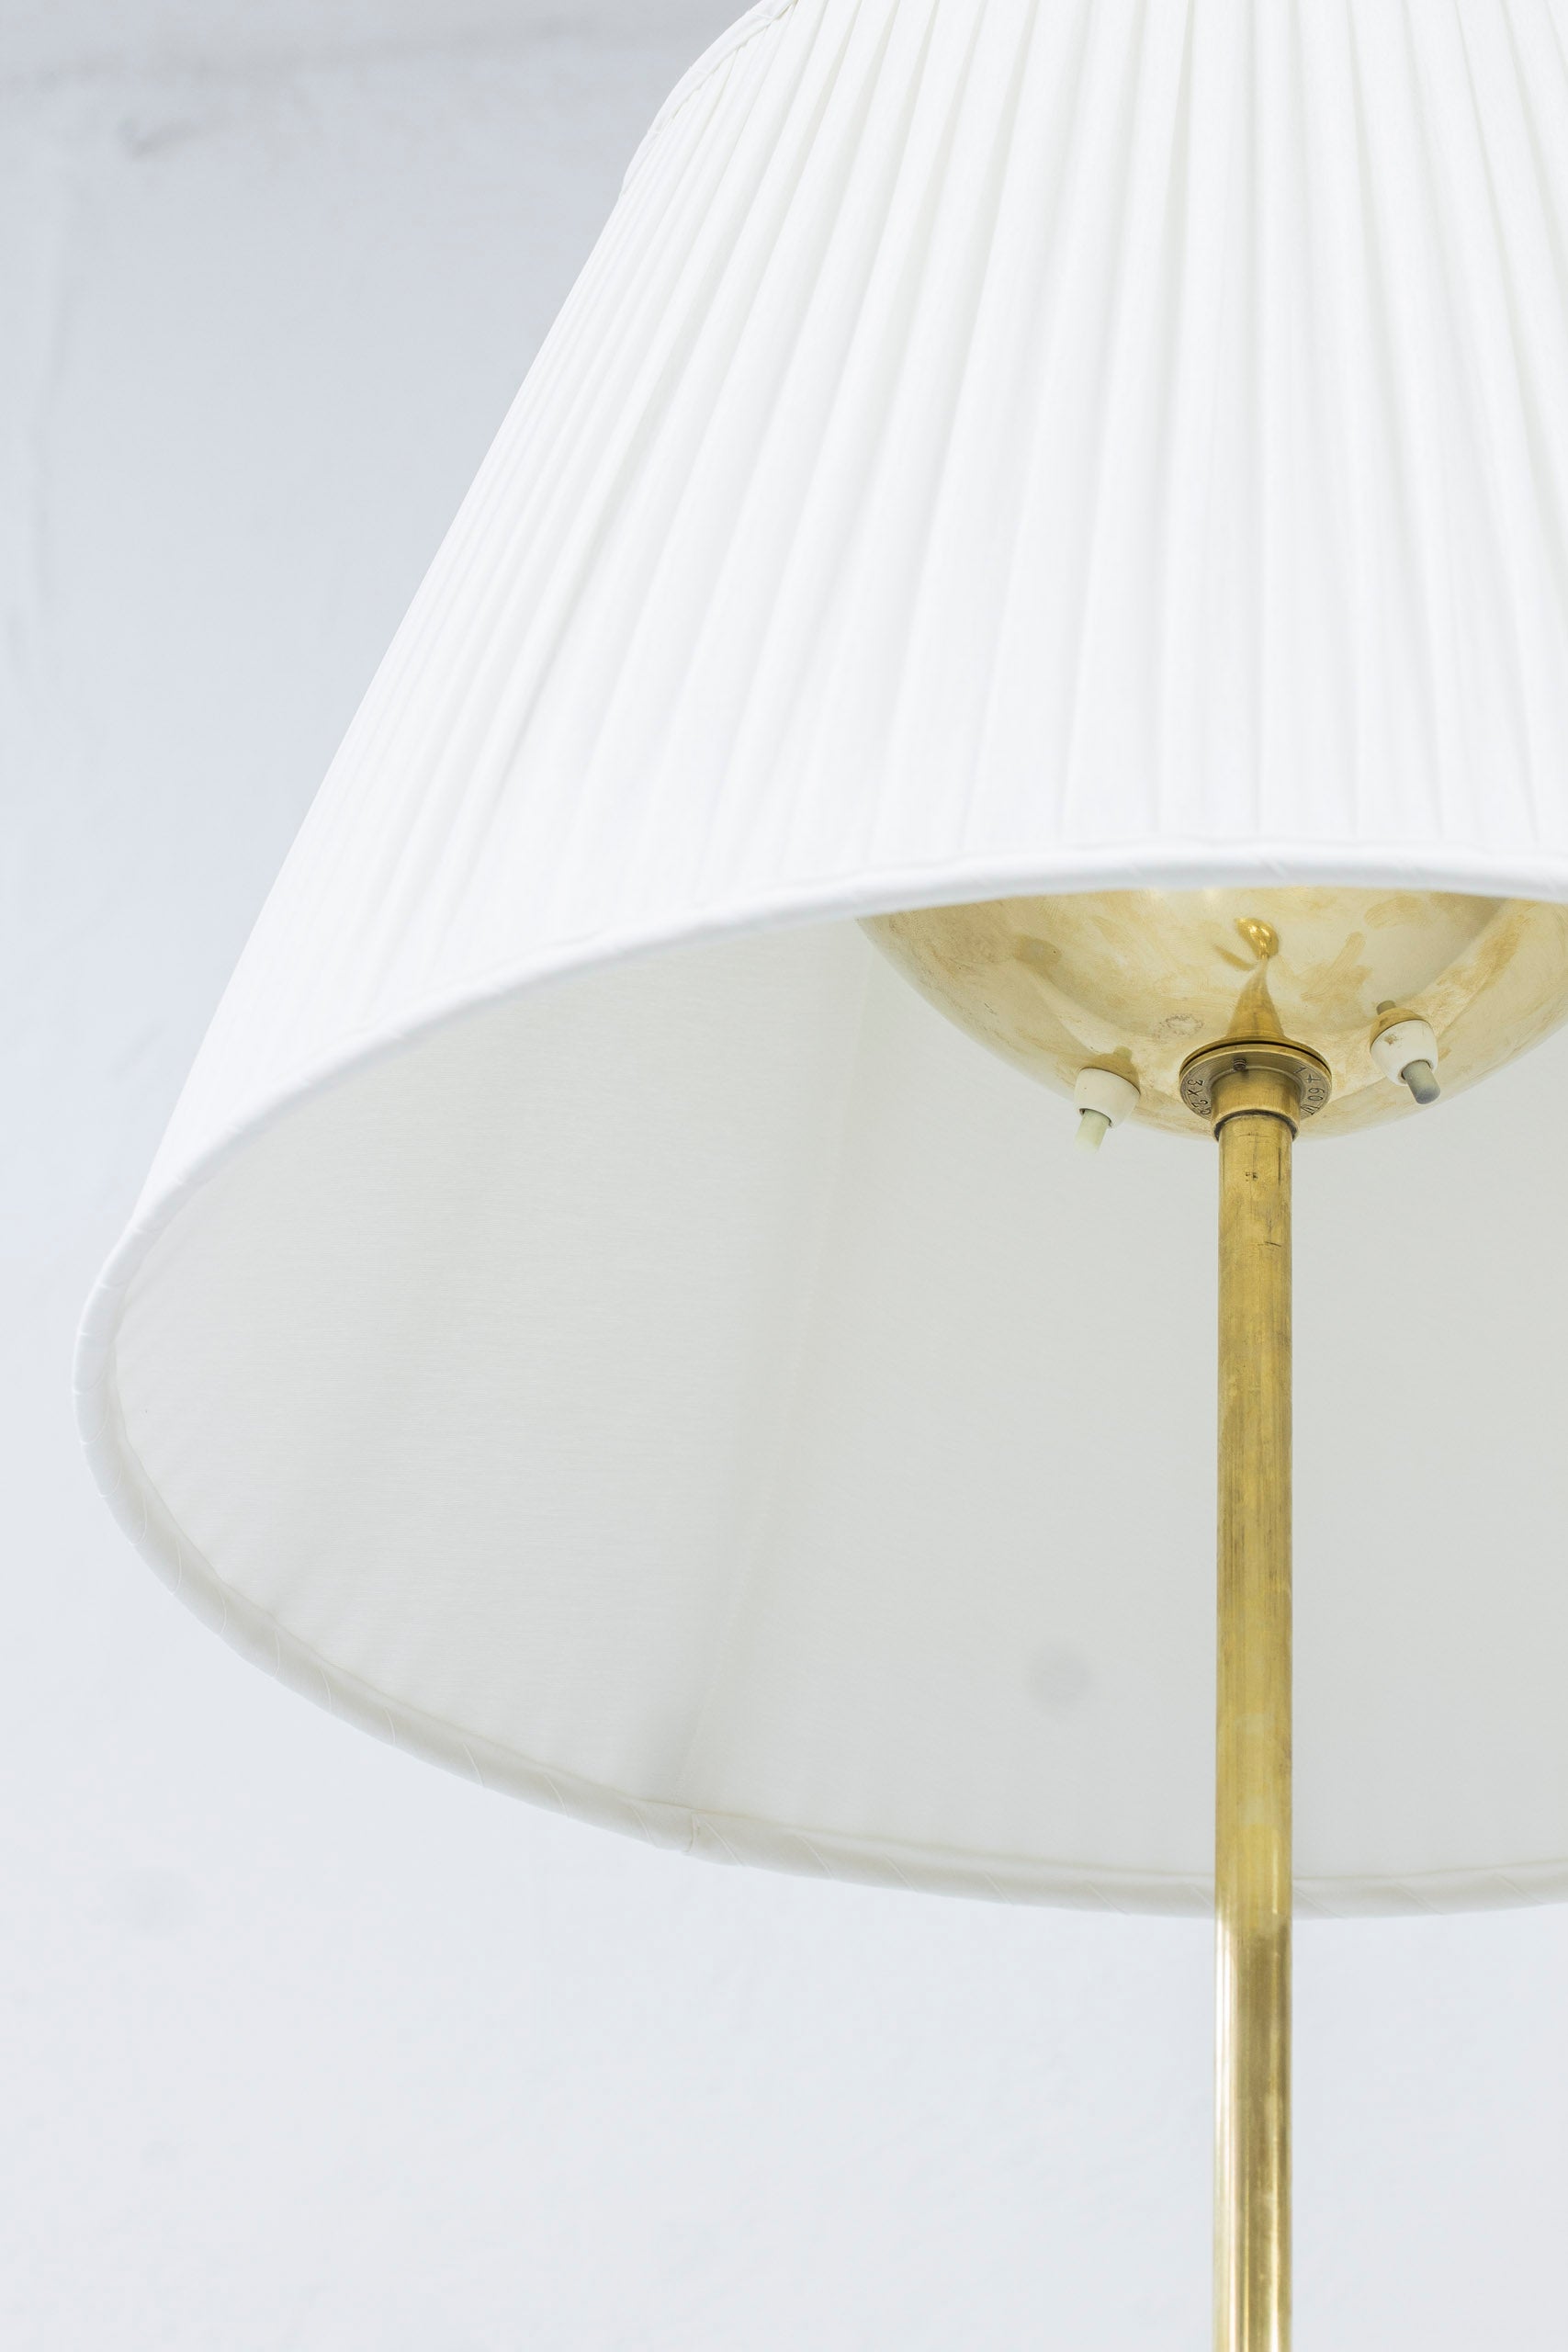 Floor lamp by Nordiska Kompaniet